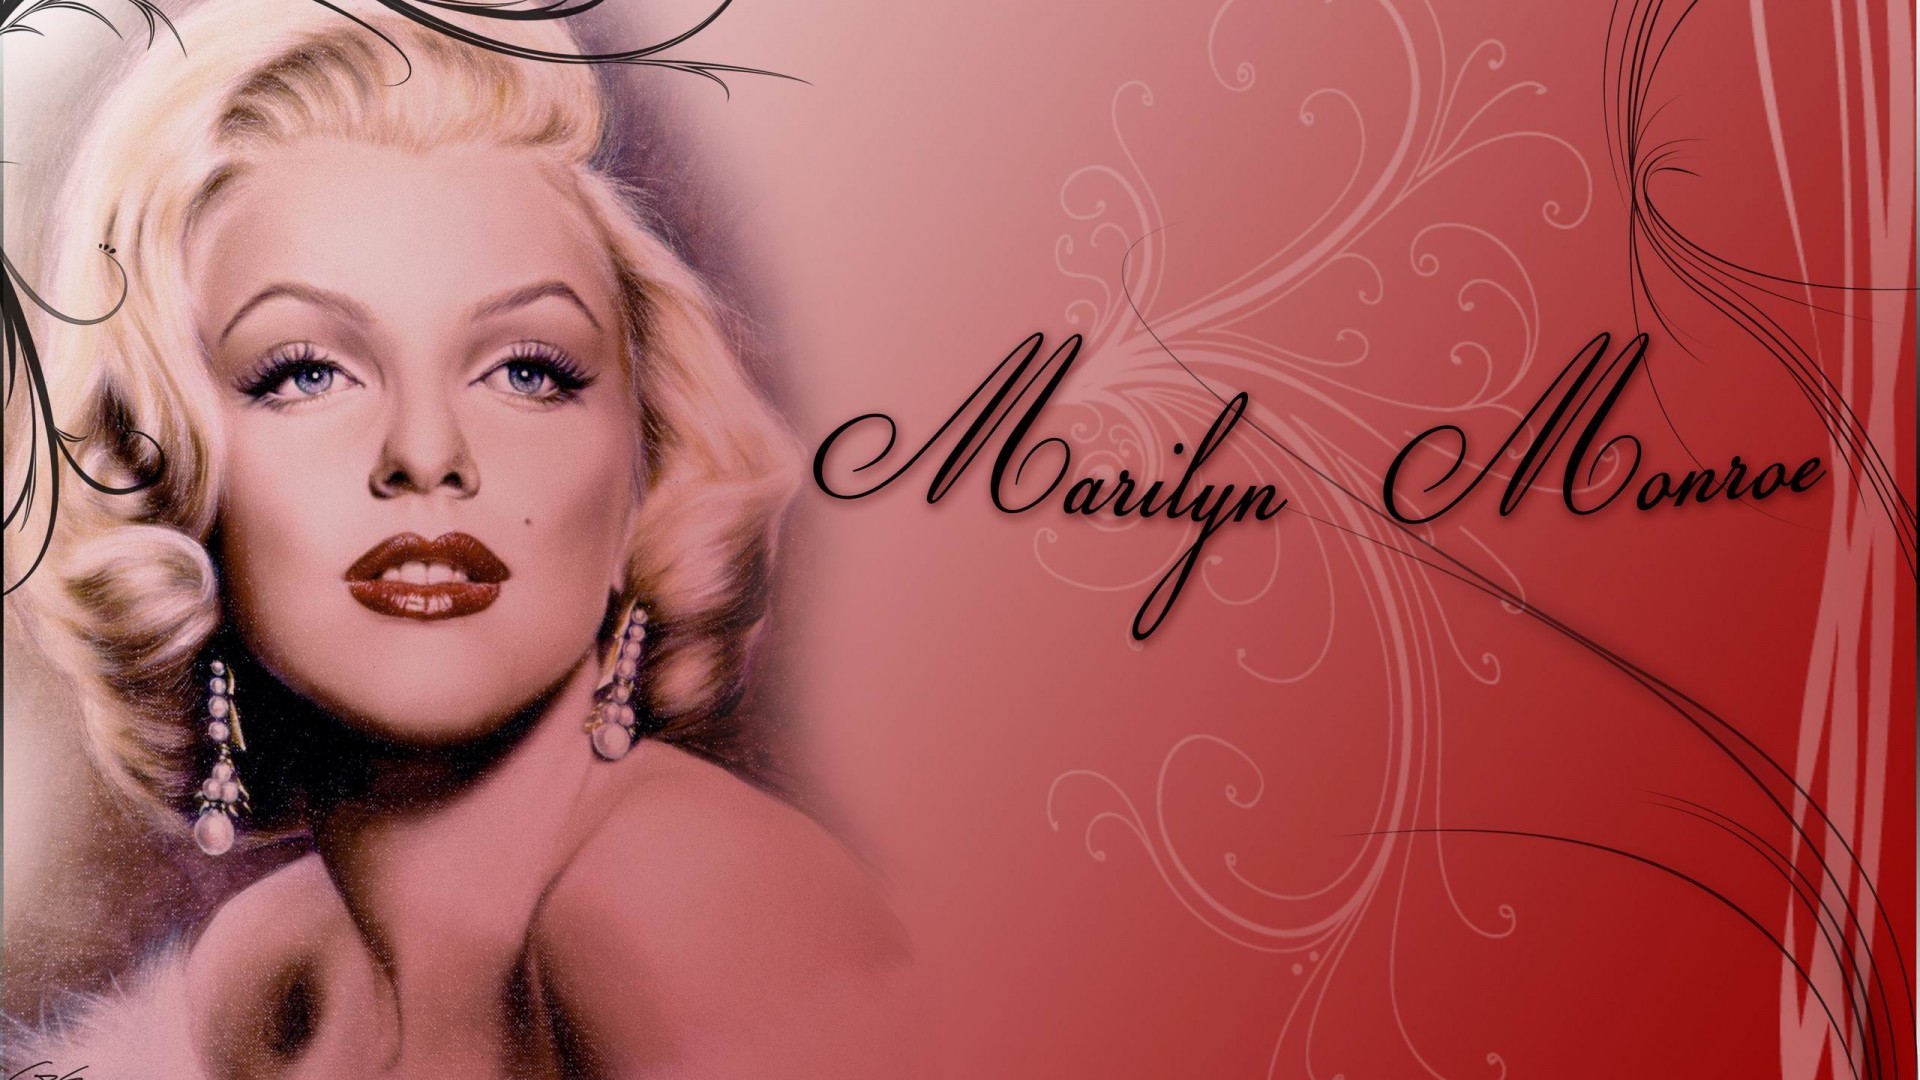 Marilyn monroe wallpaper 15 cute Collection marilyn monroe